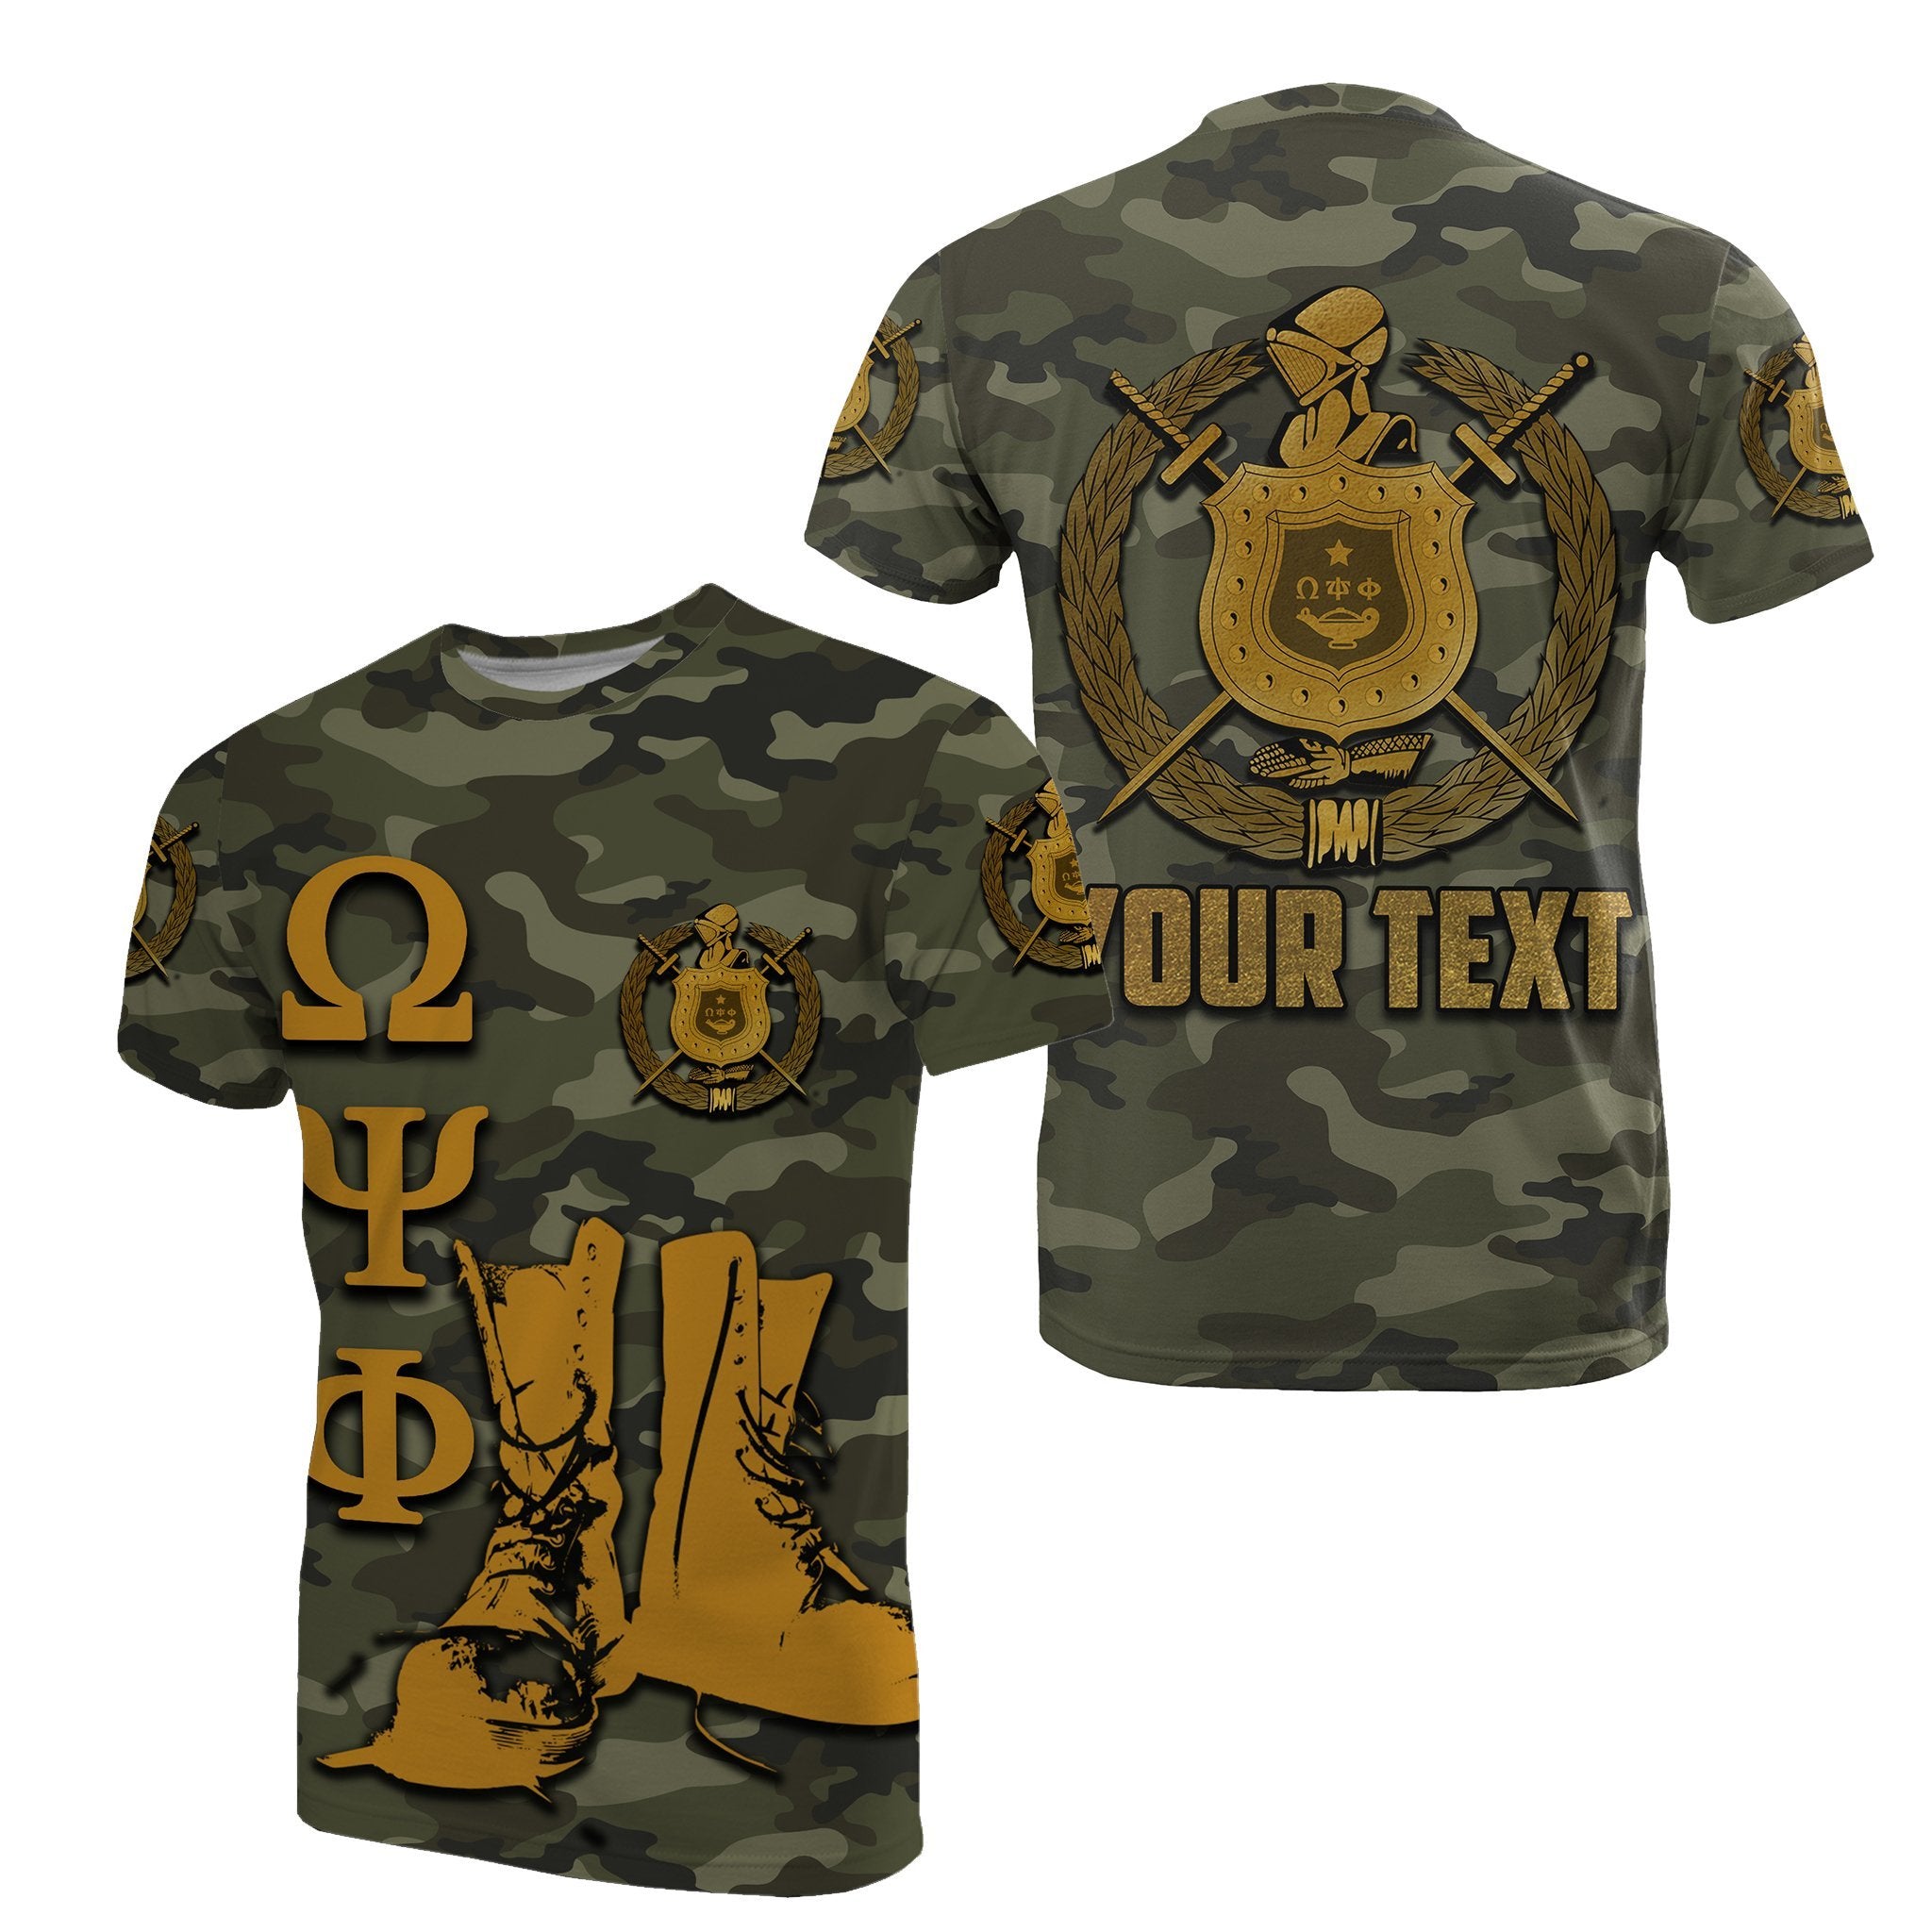 (Custom Personalised) Greek Life T Shirt Omega Psi Phi Army Boots 1911 Lt6